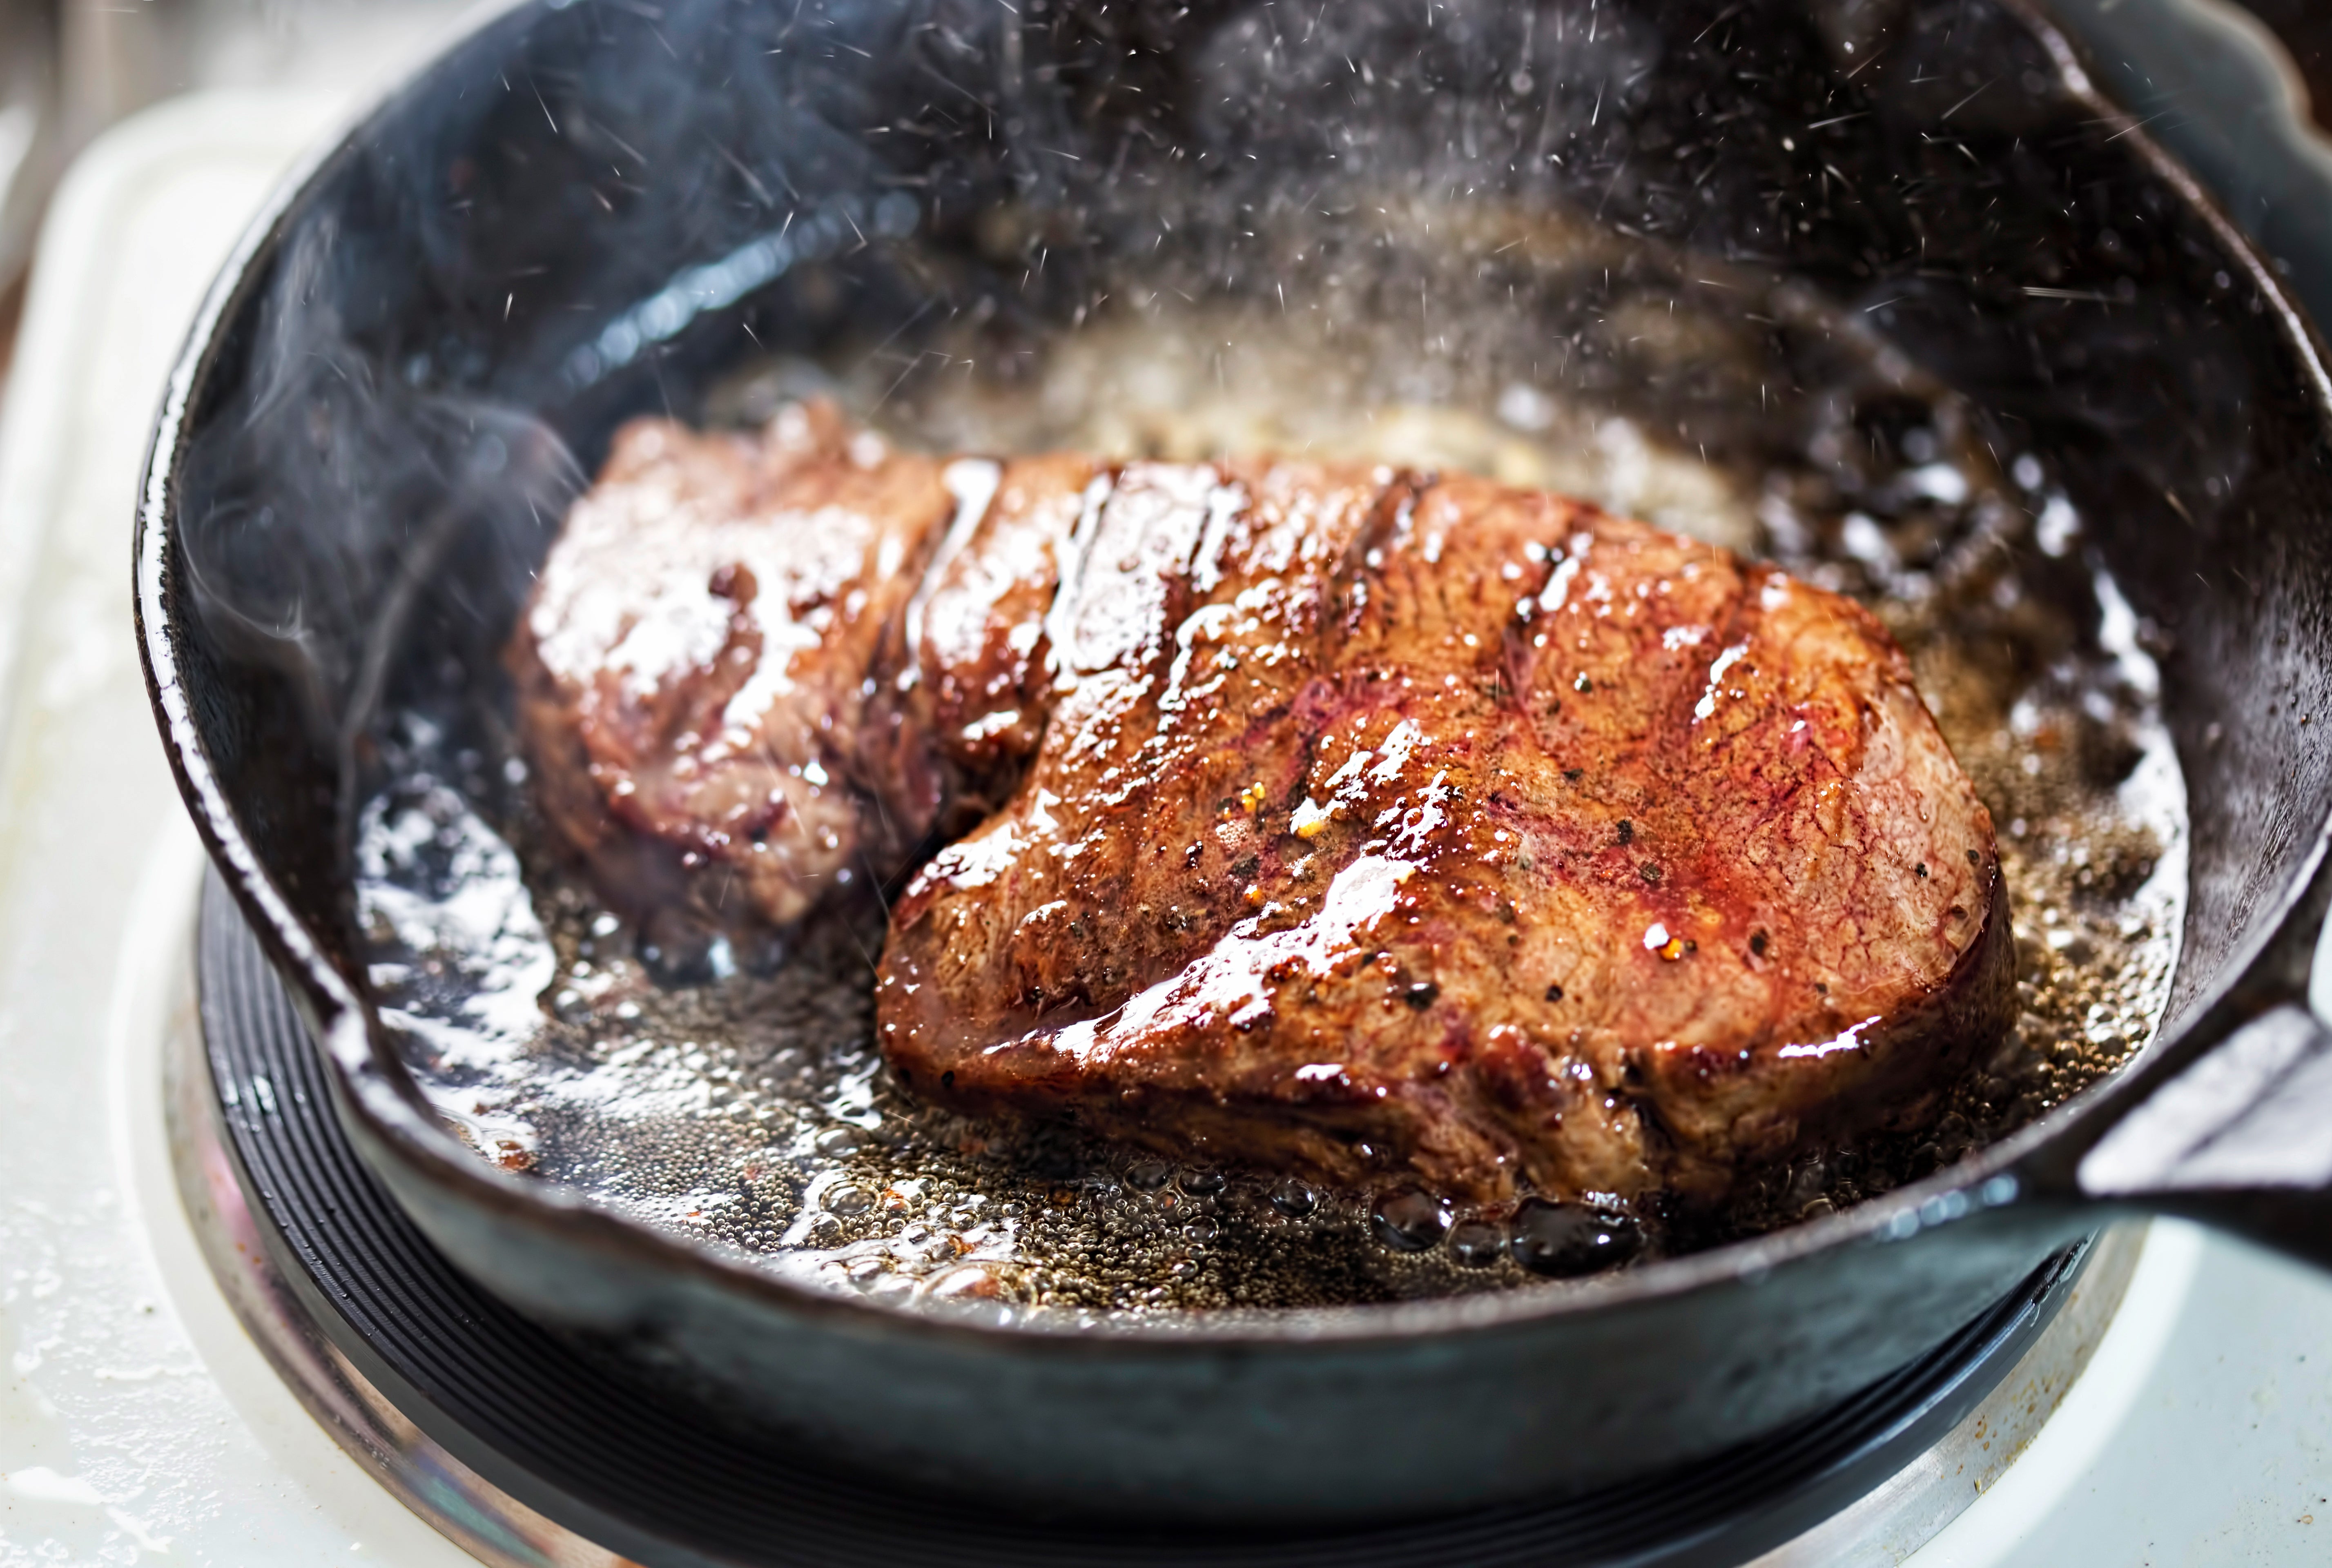 An astonishingly good recipe for steak